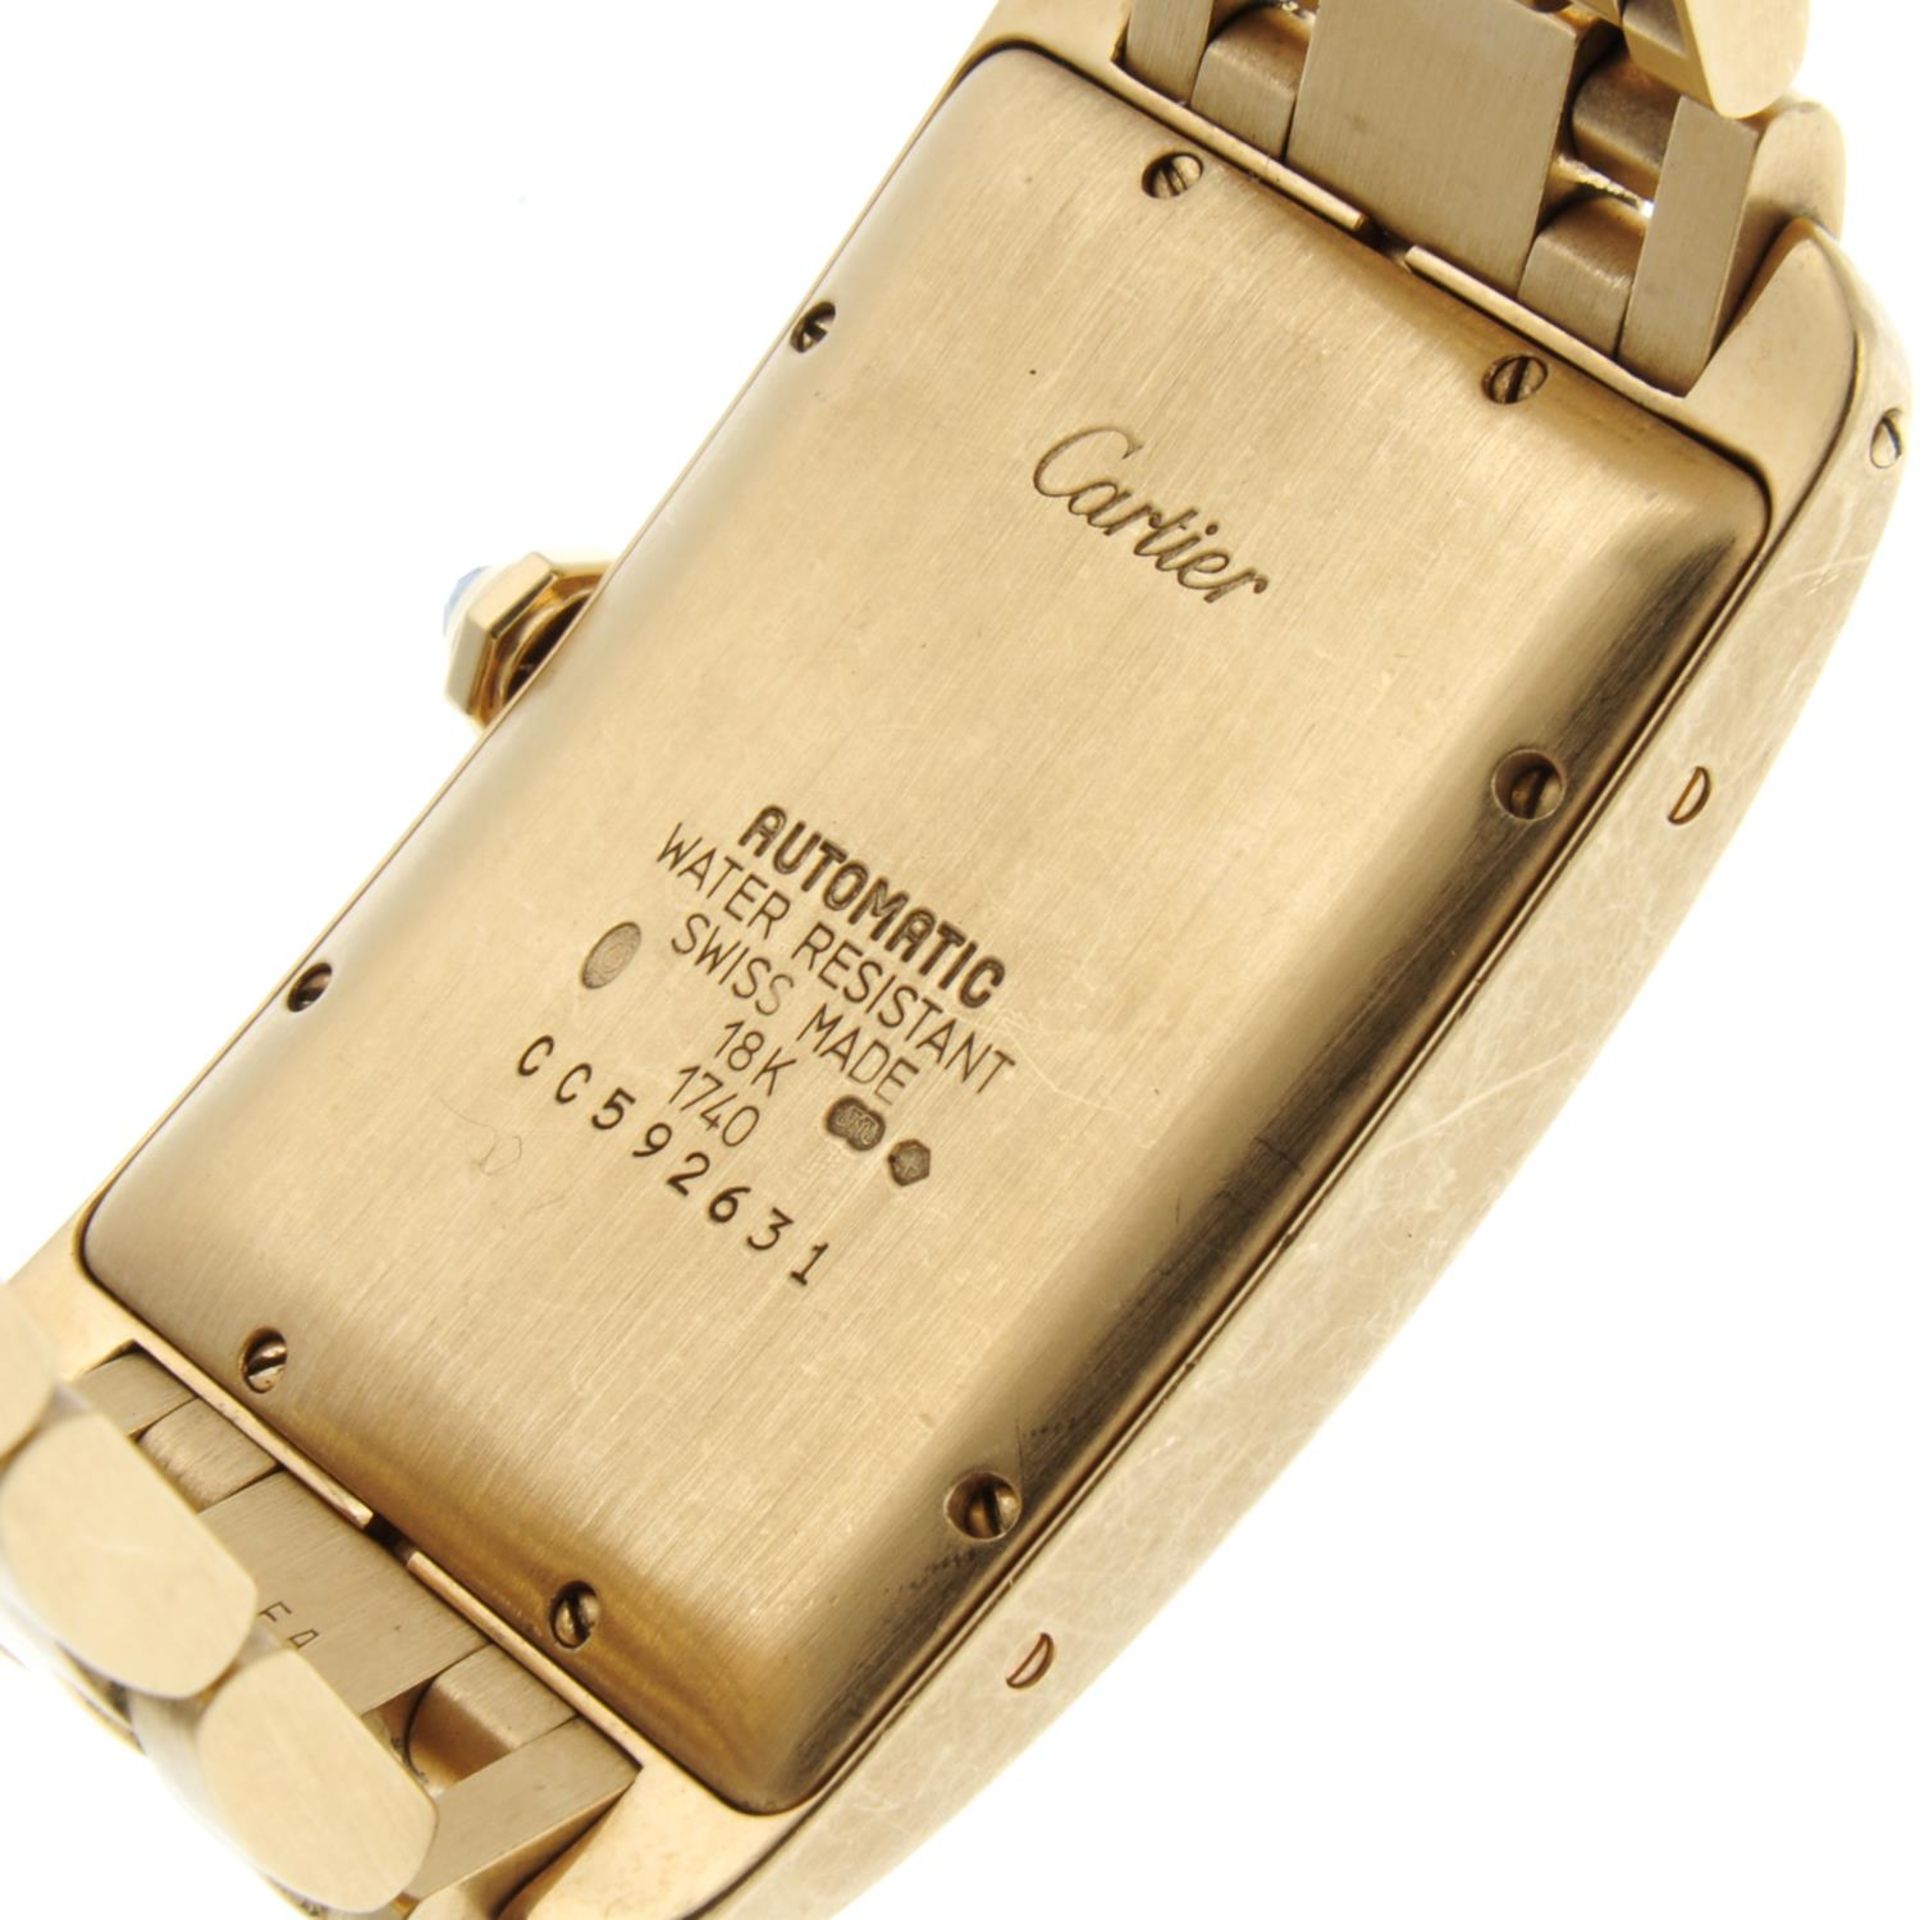 CARTIER - a gentleman's Tank Americaine bracelet watch. - Image 4 of 4